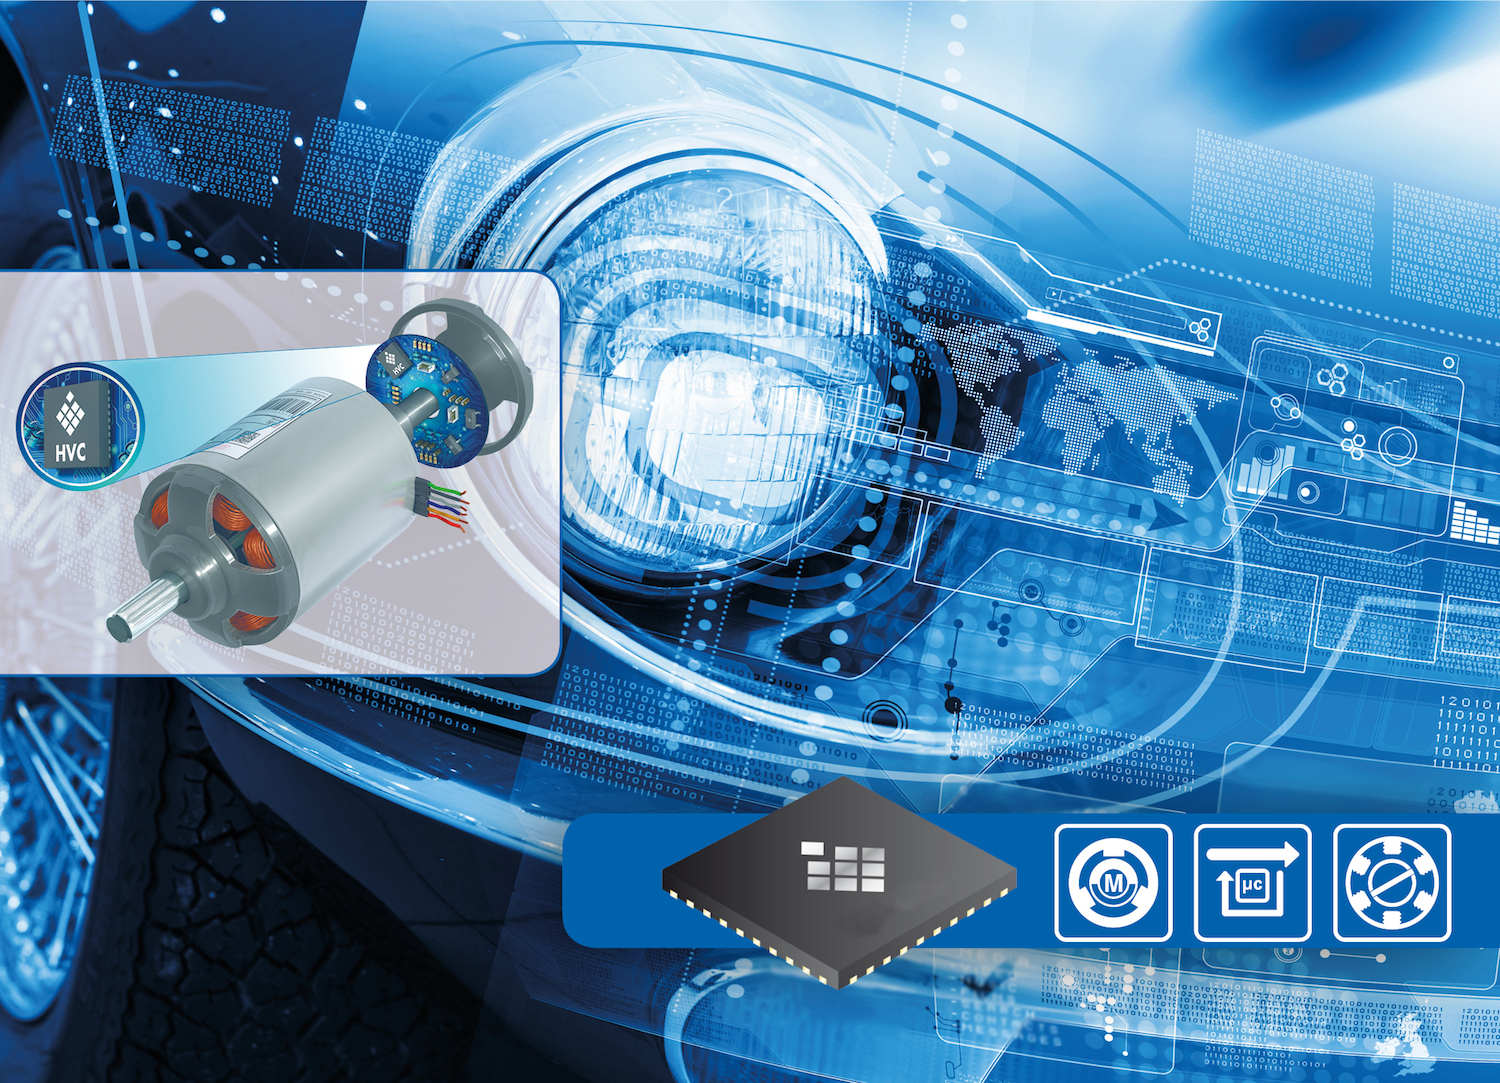 Flex Servo-Drive for Direct Control of Electric Motors